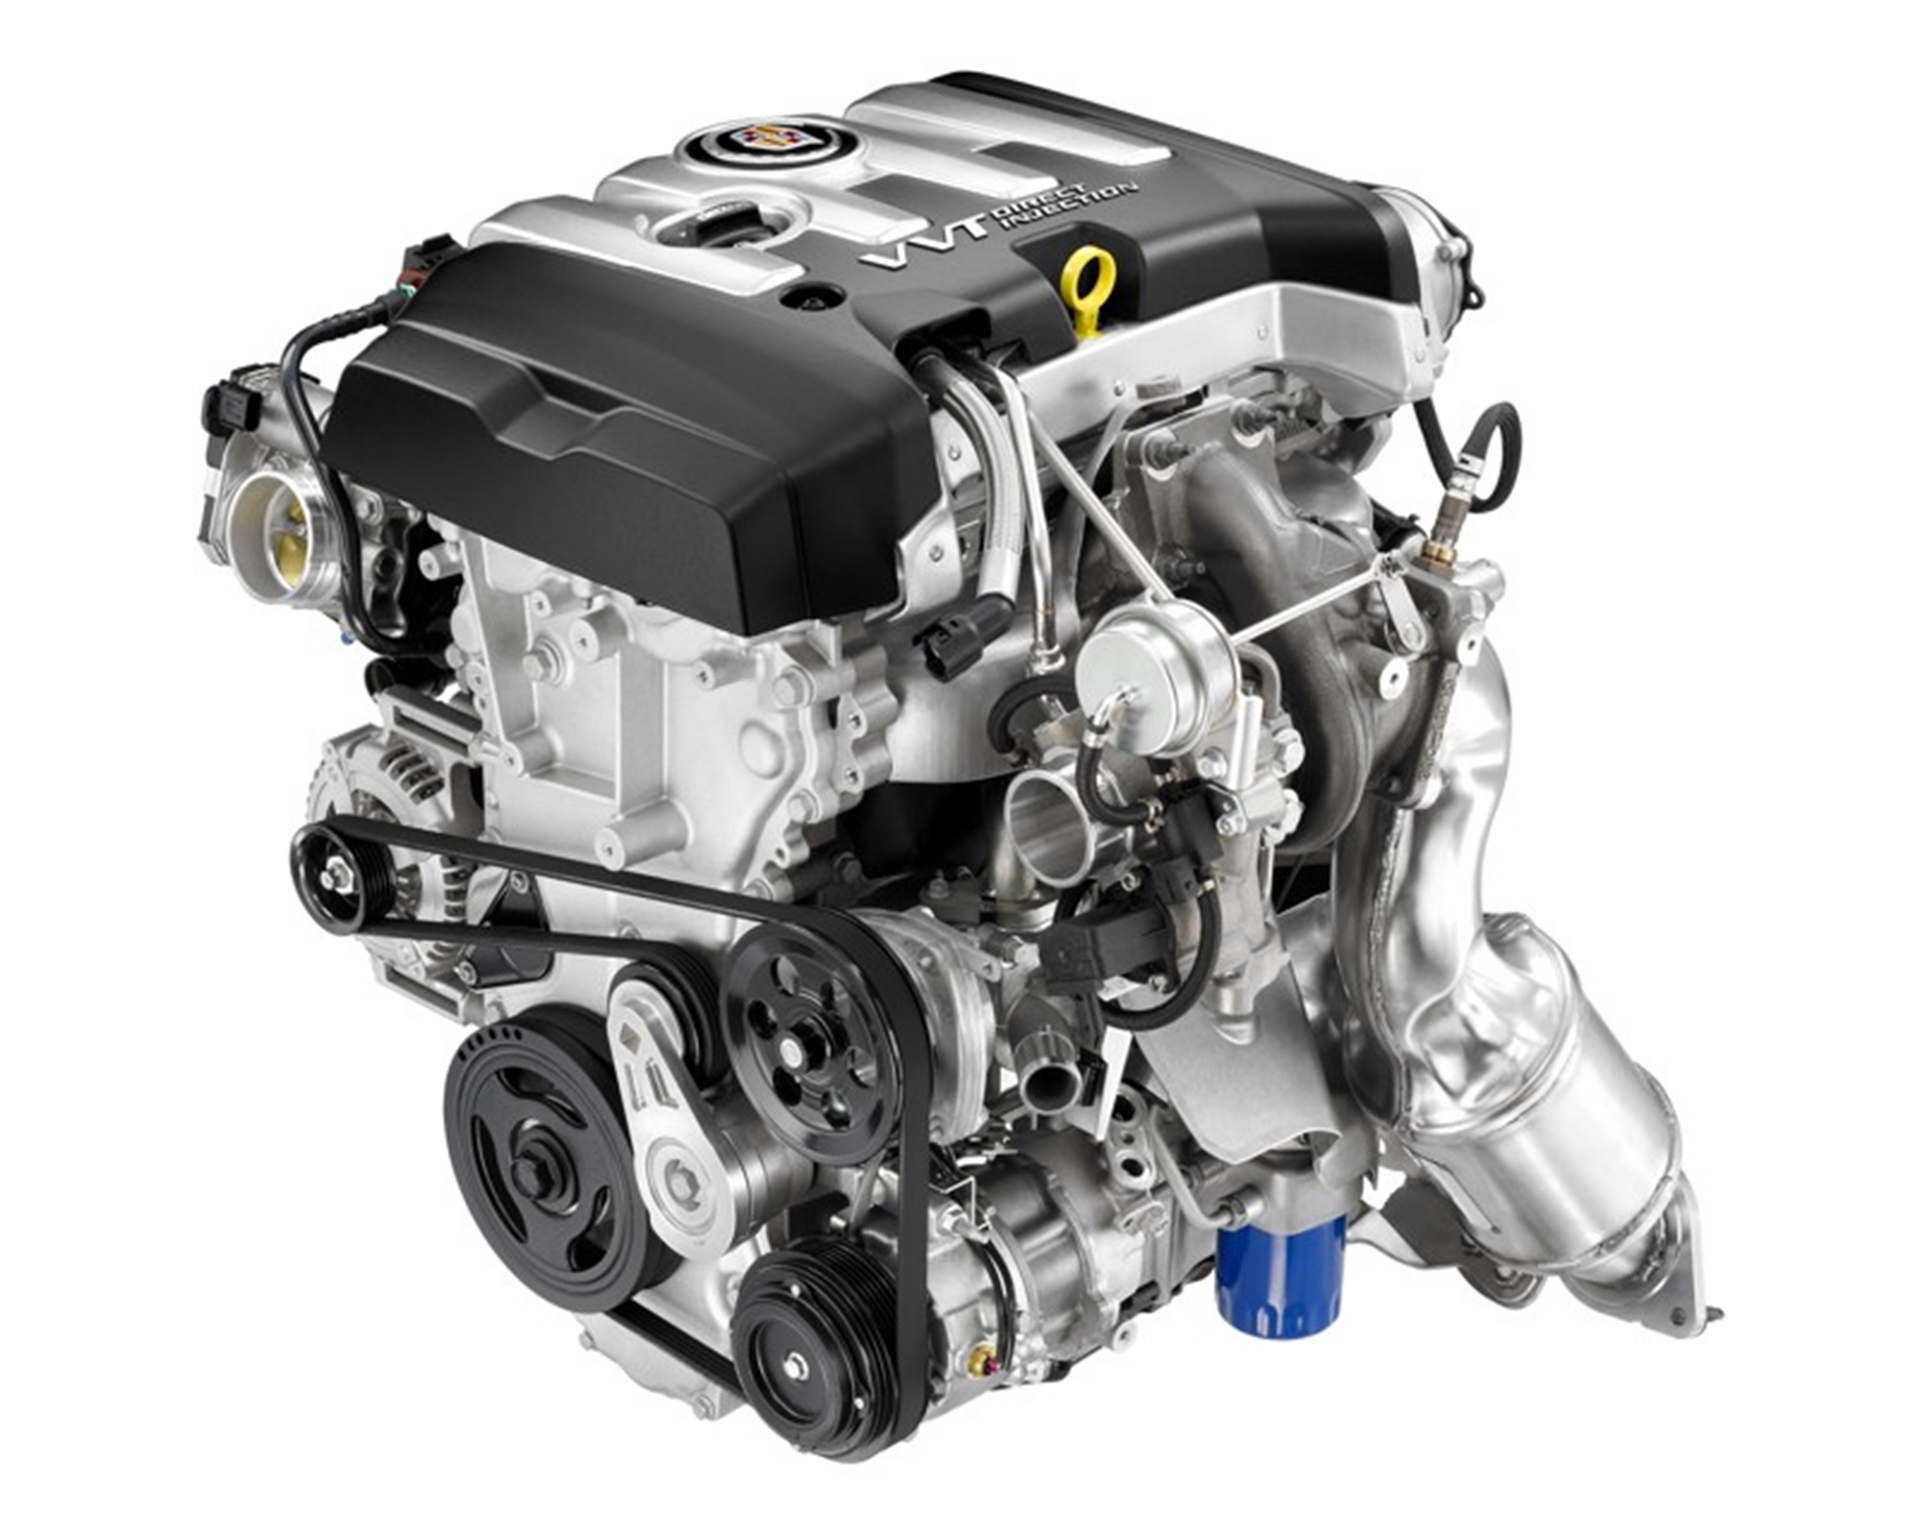 Power-Dense Engines Drive the Cadillac ATS